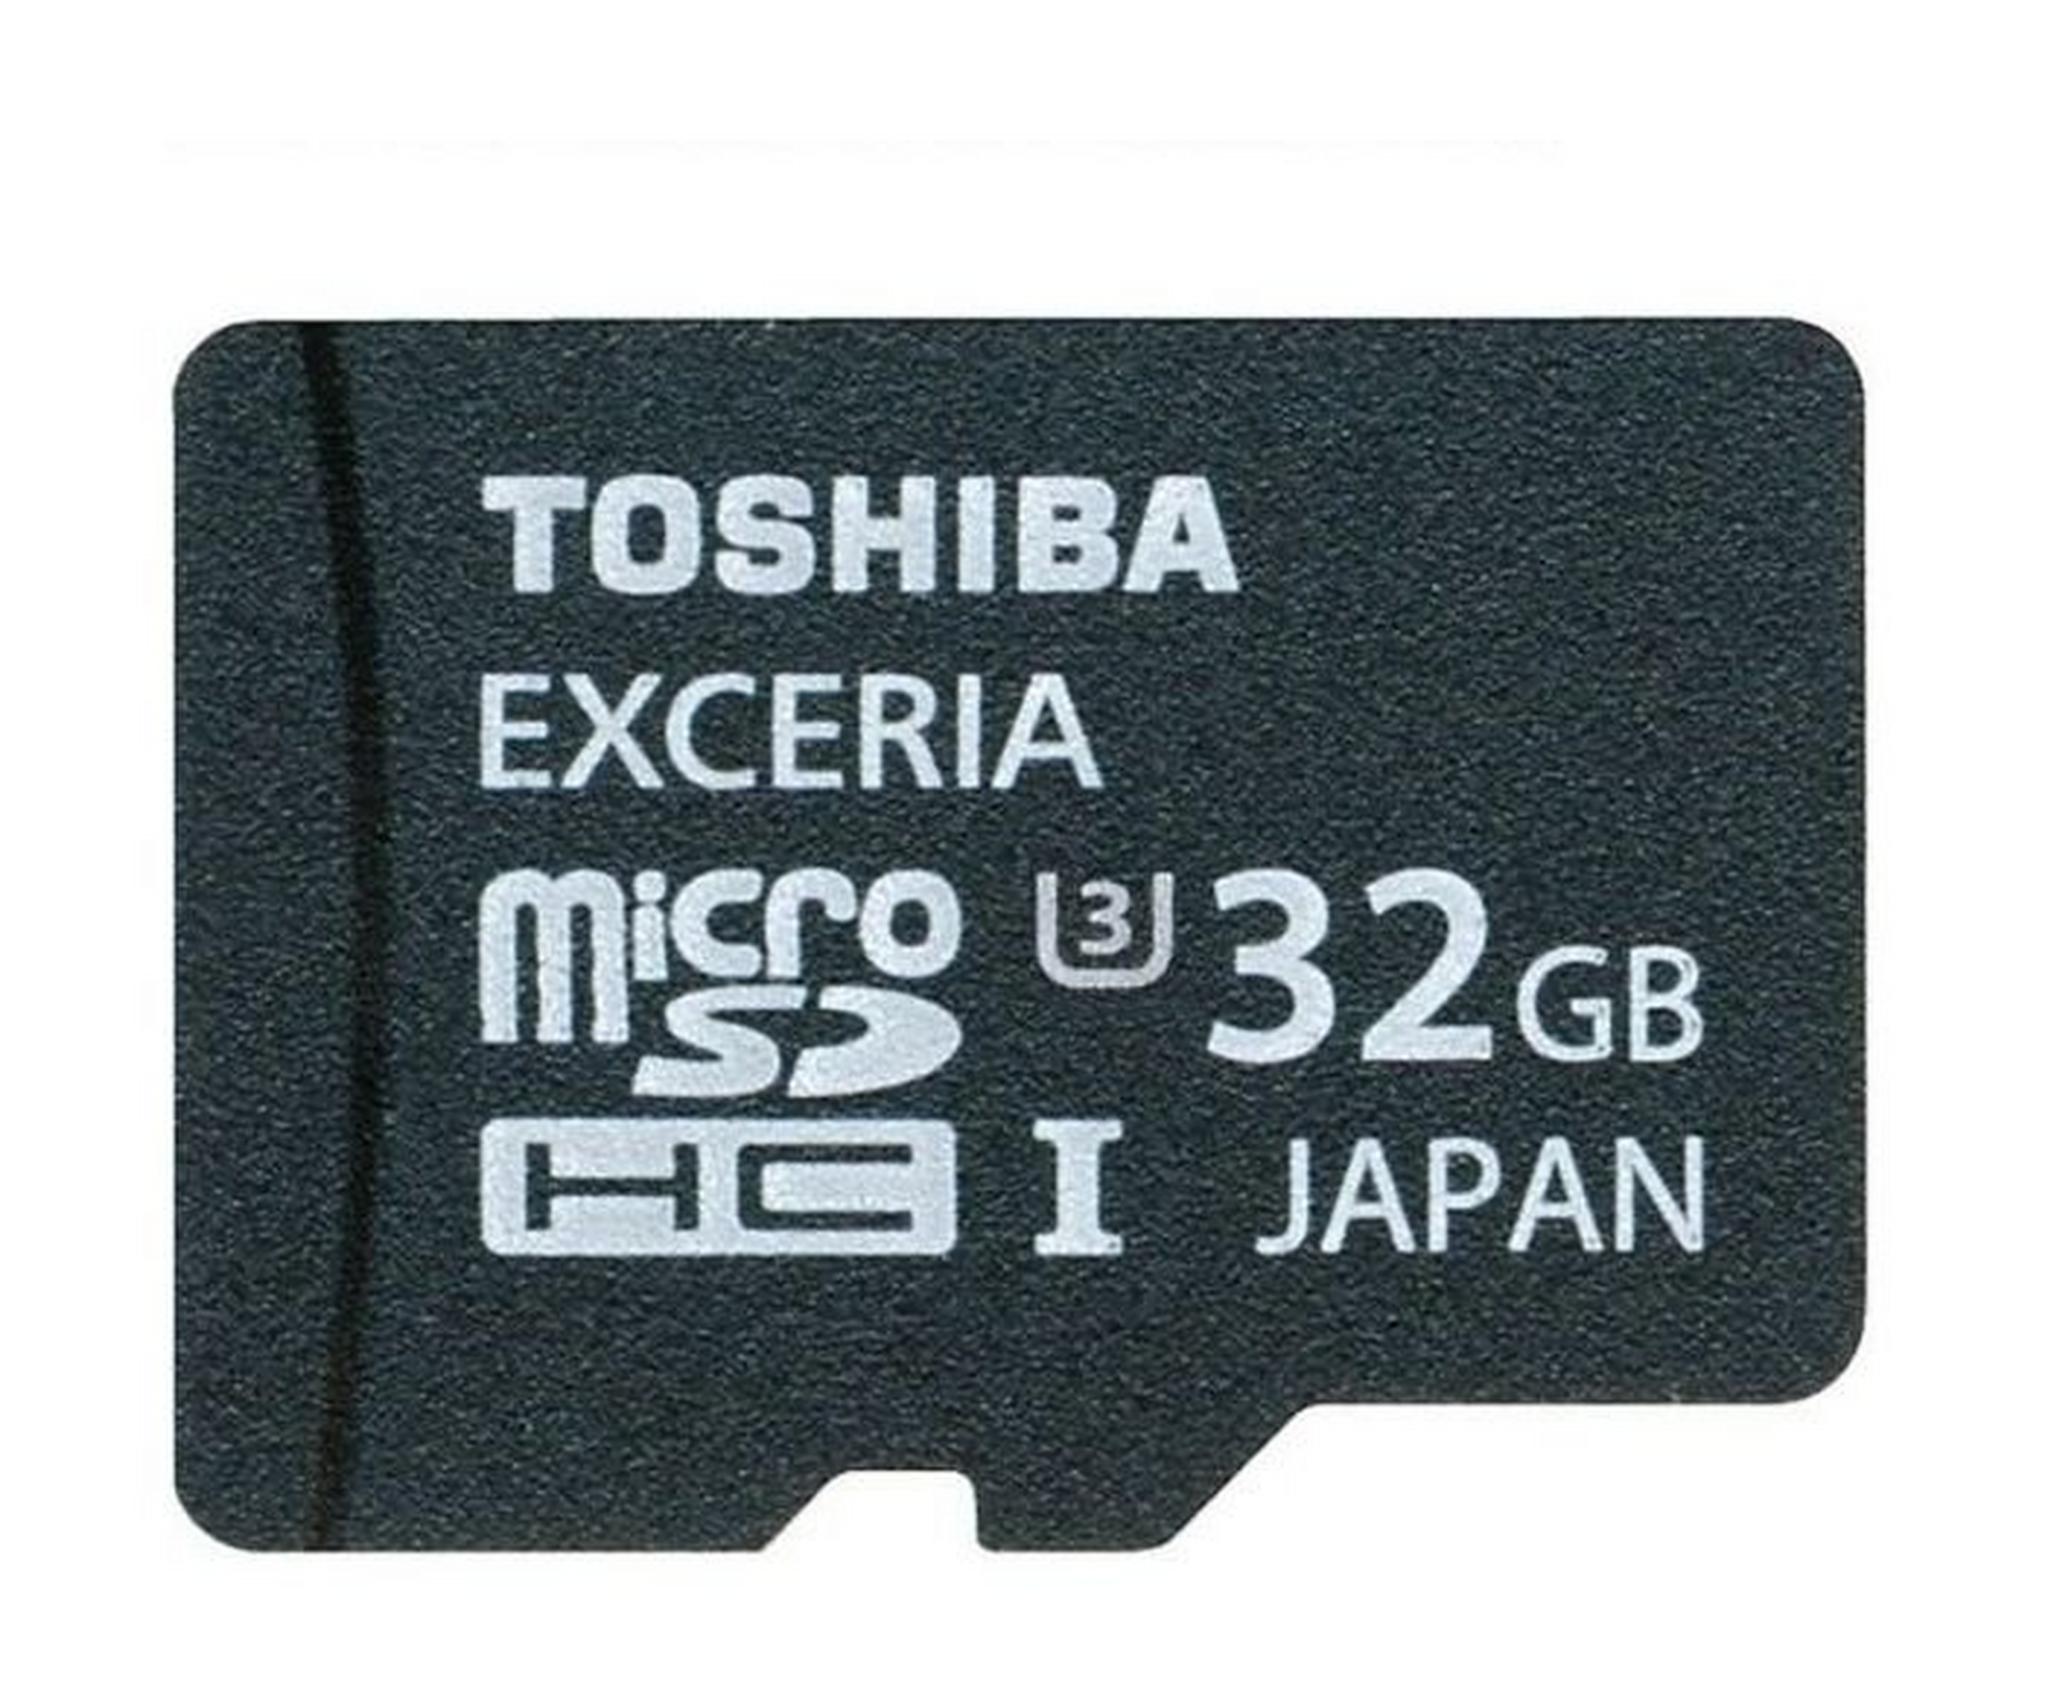 Toshiba Exceria UHS 32 GB Class 10 95Mb/s MicroSD Memory Card - SD-CX64UHS1